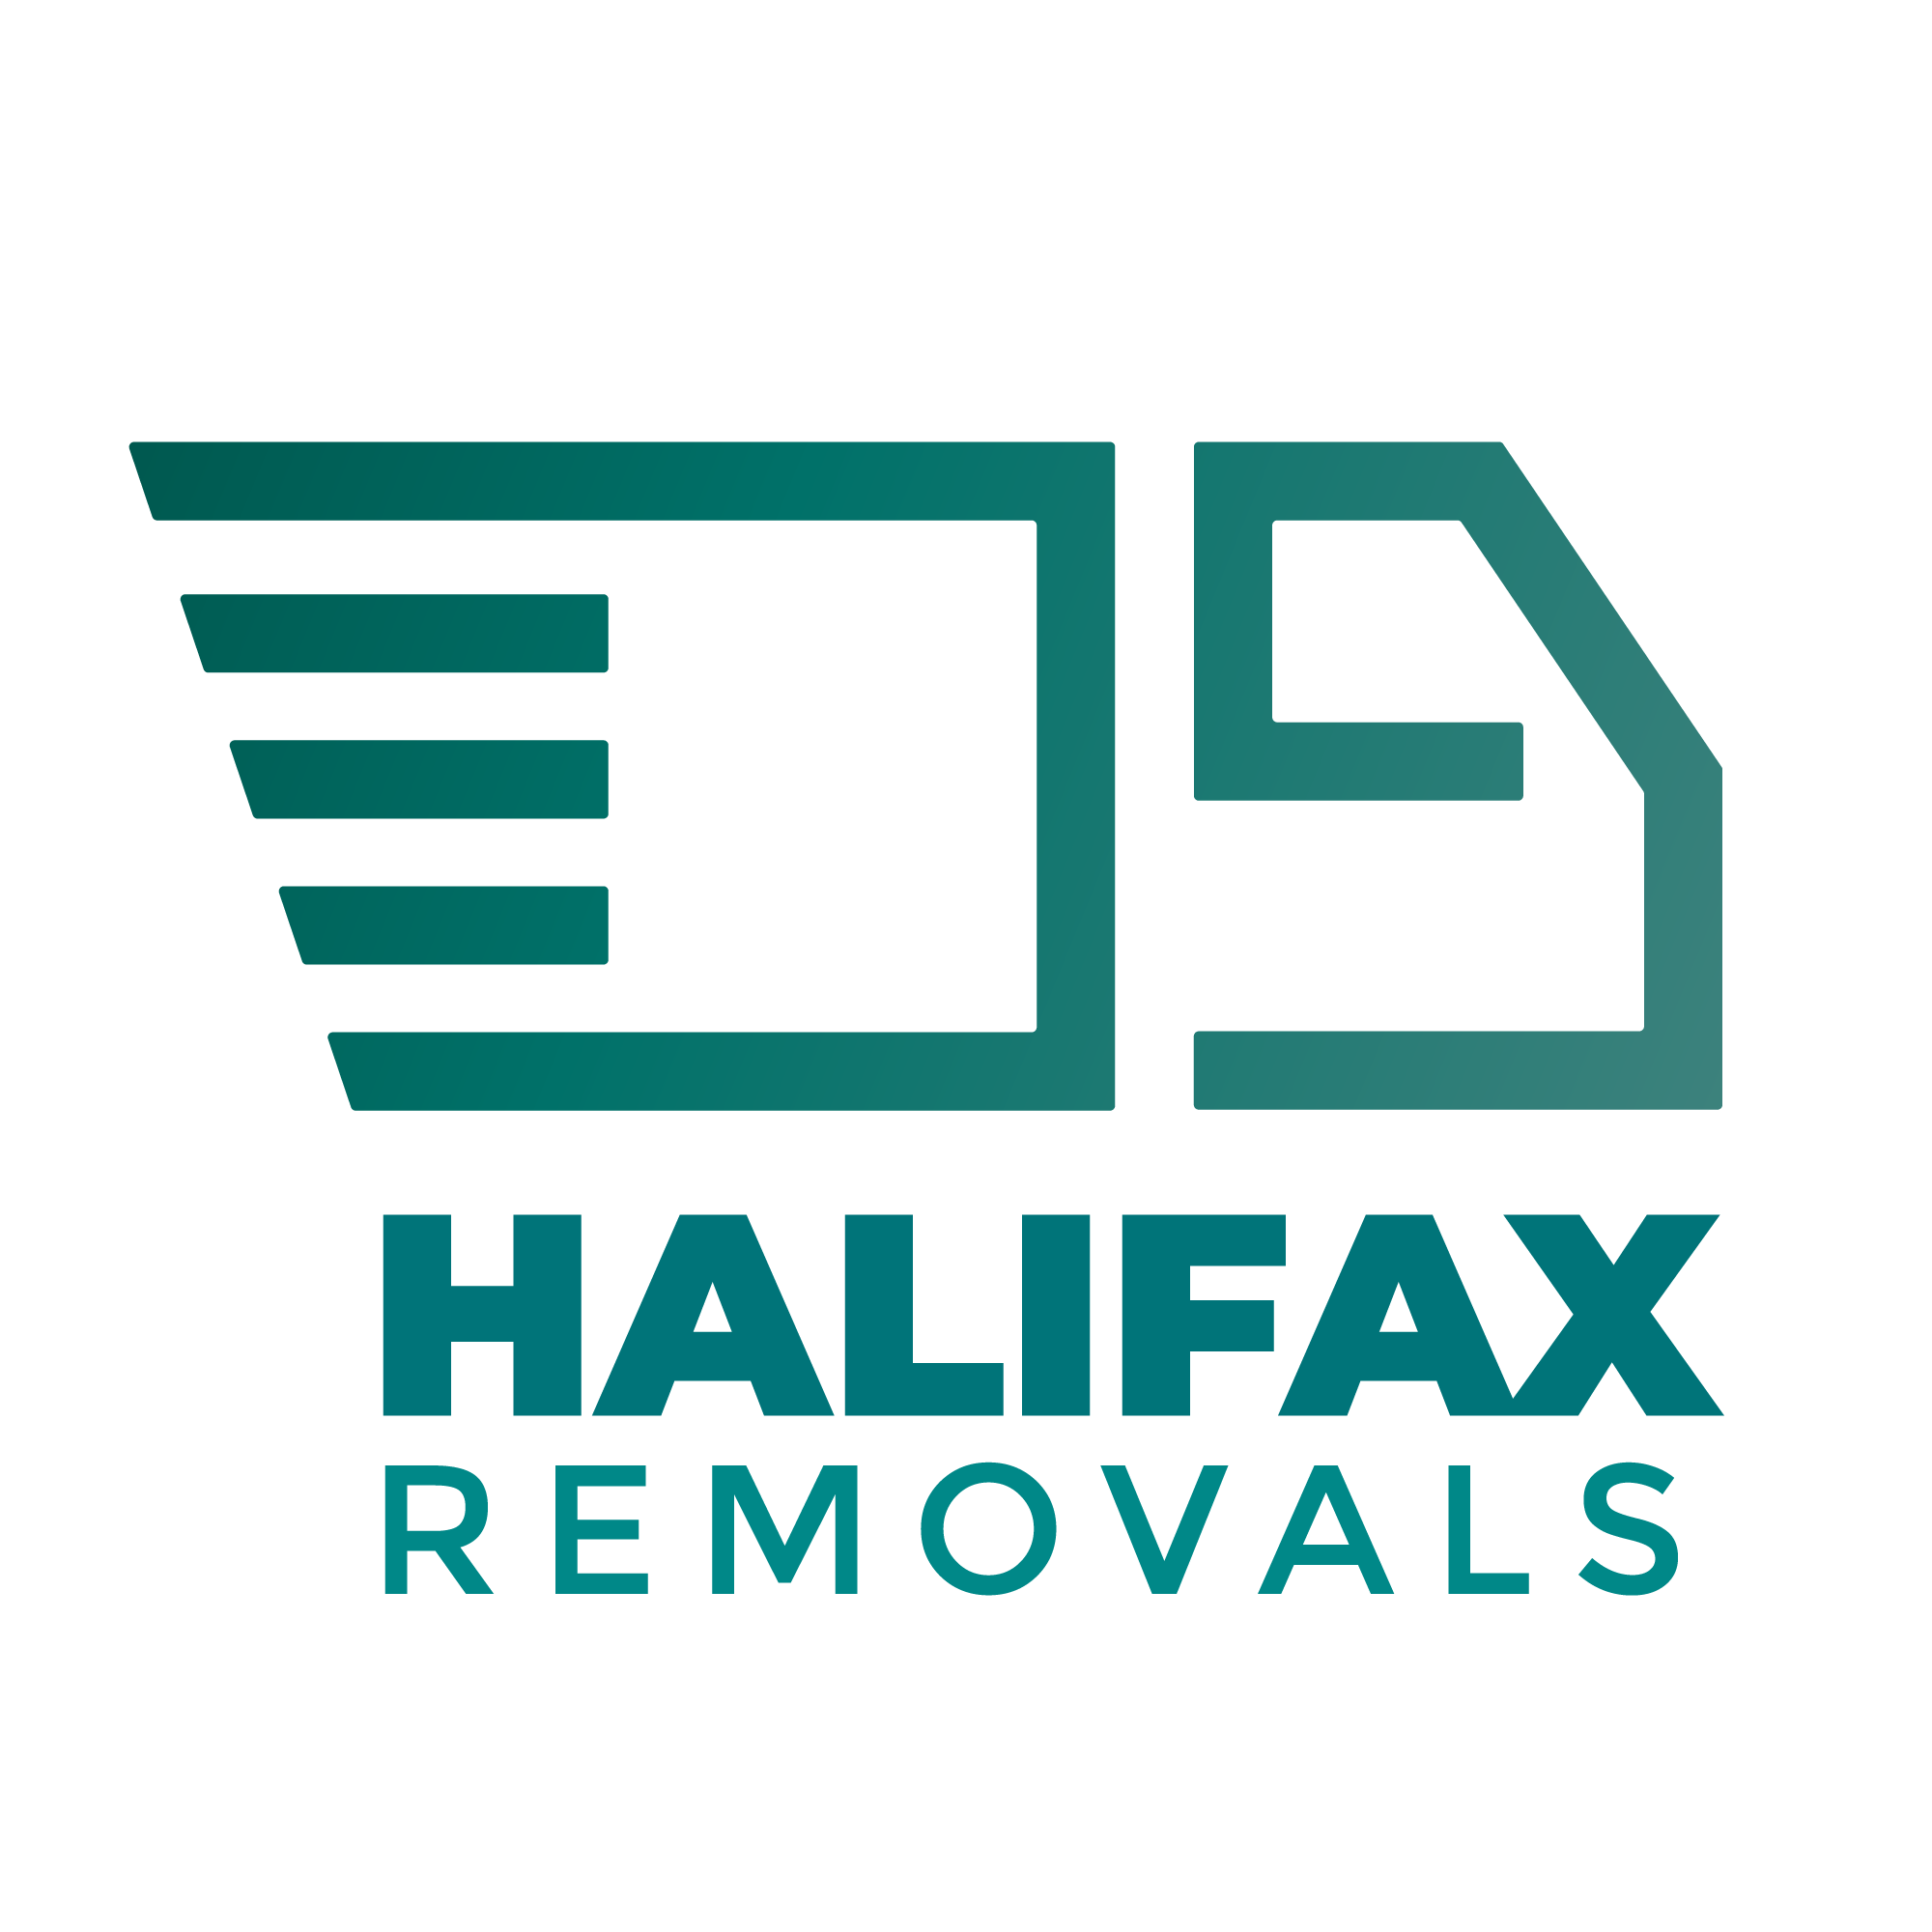 Halifax Removals -logo